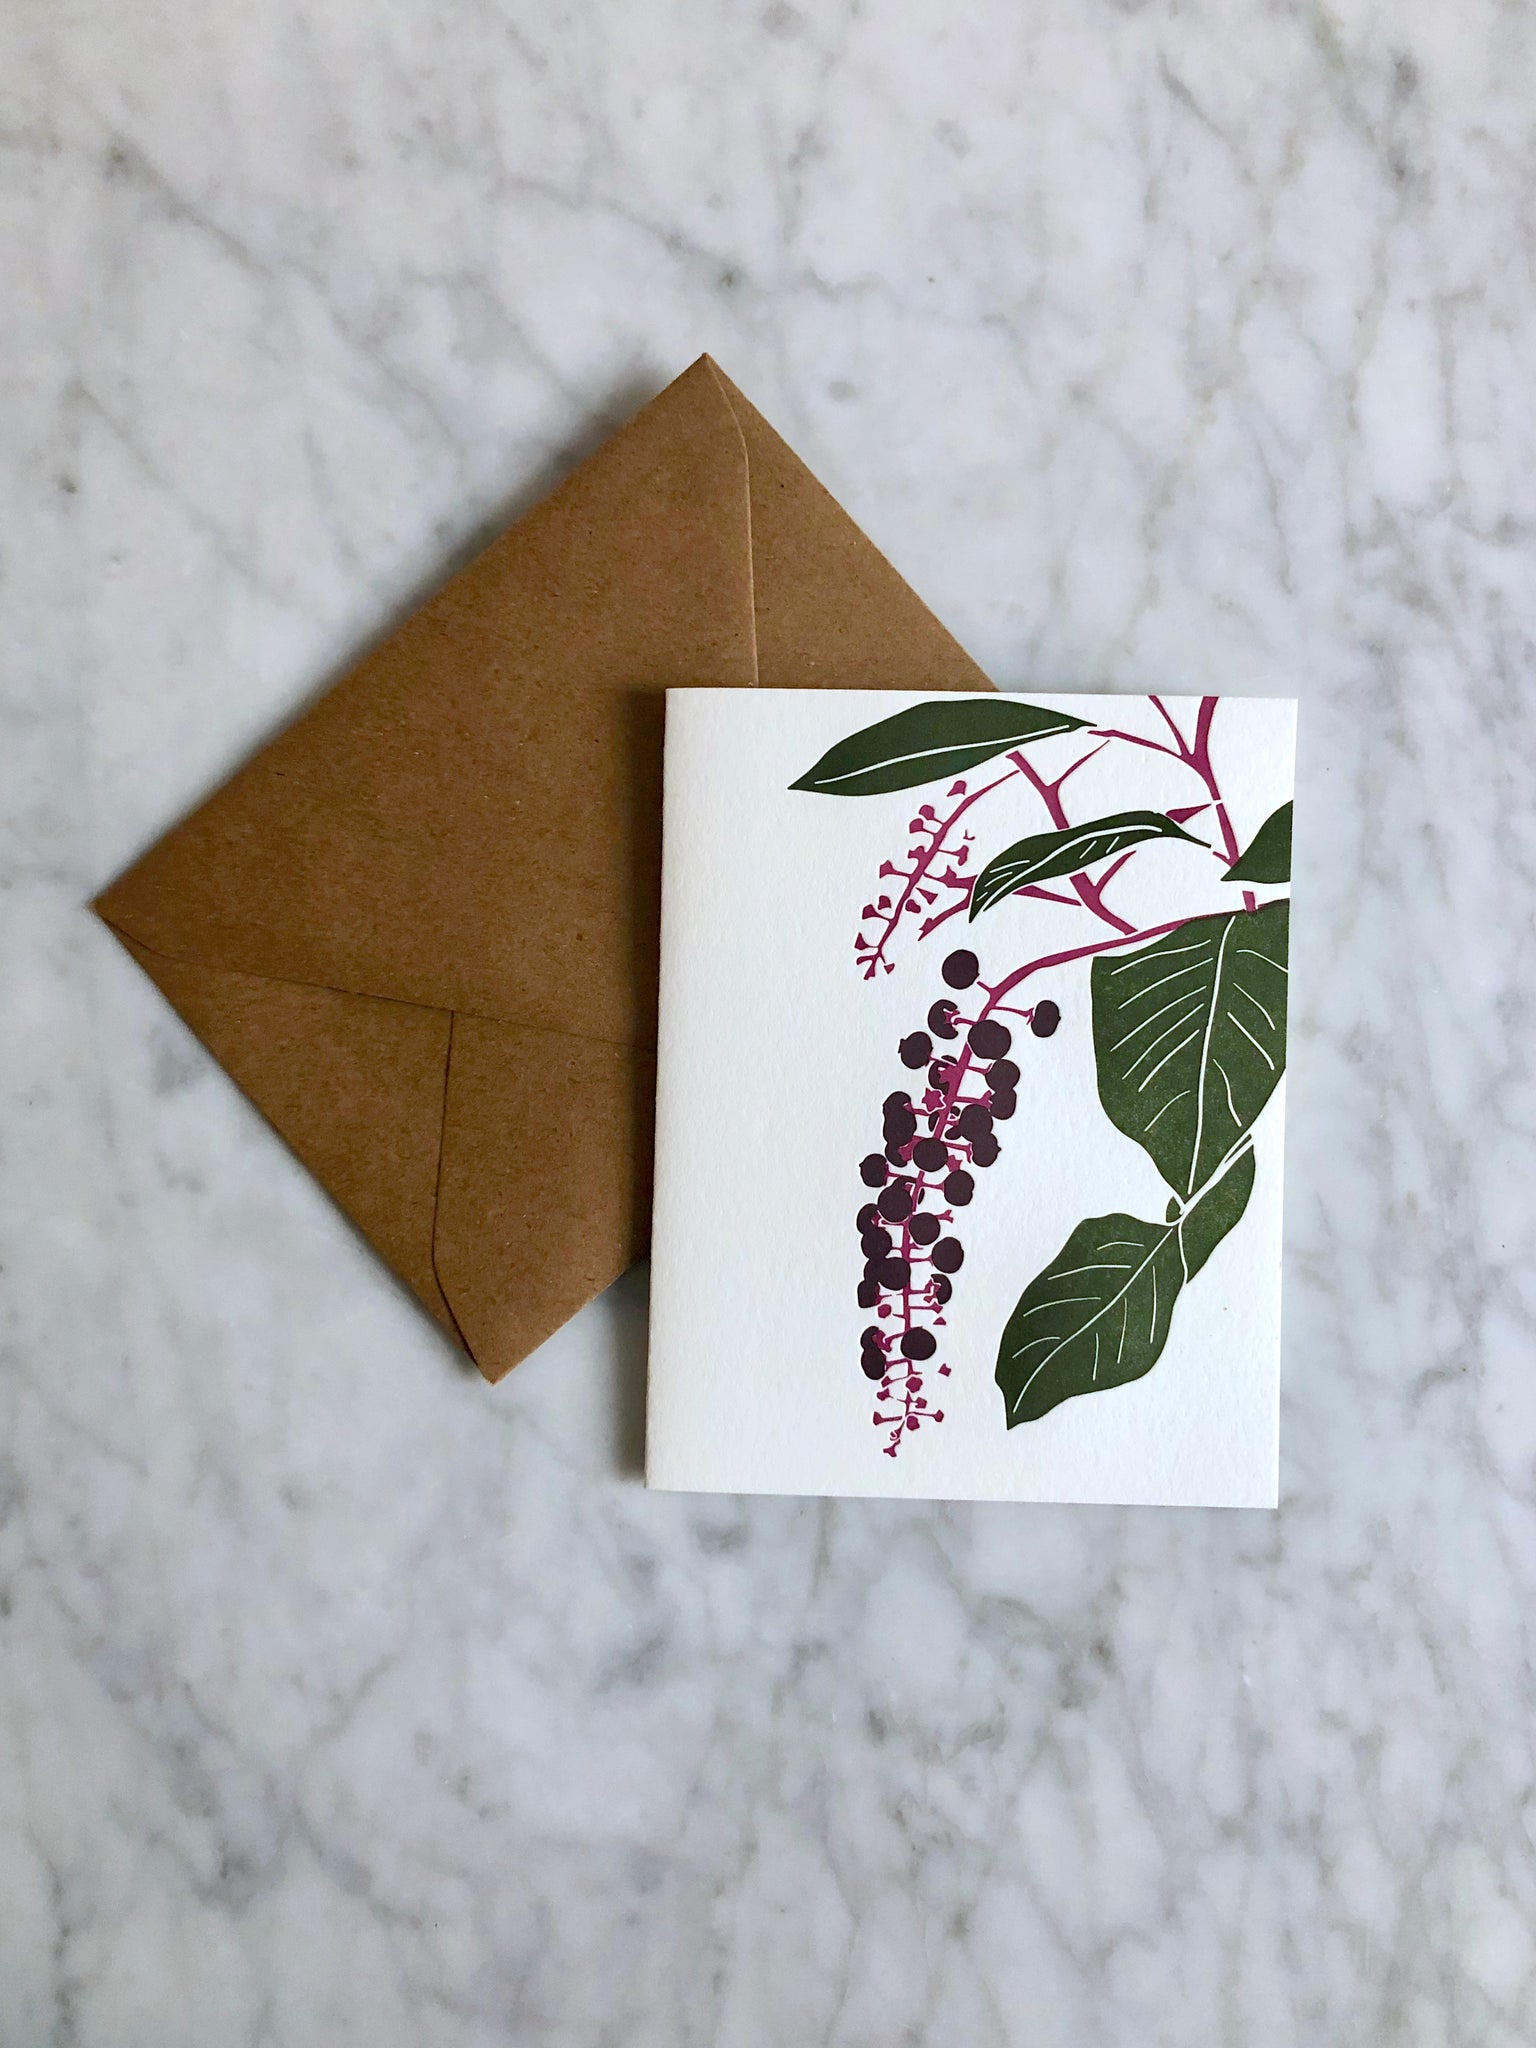 Letterpress Greeting Cards